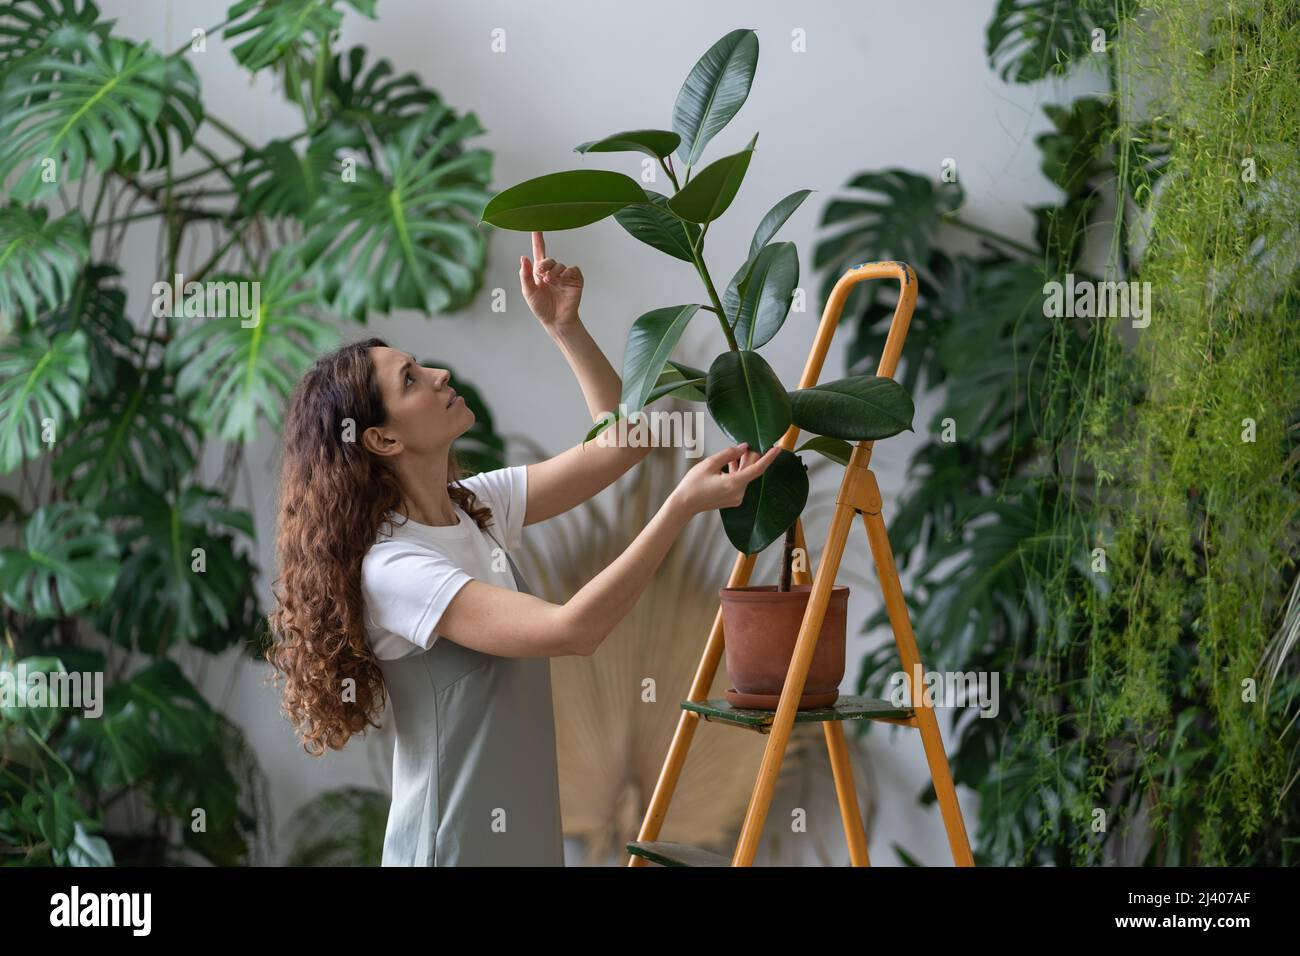 Freelance gardener girl take care of houseplants in home garden. Caring florist wiping ficus leaves Stock Photo